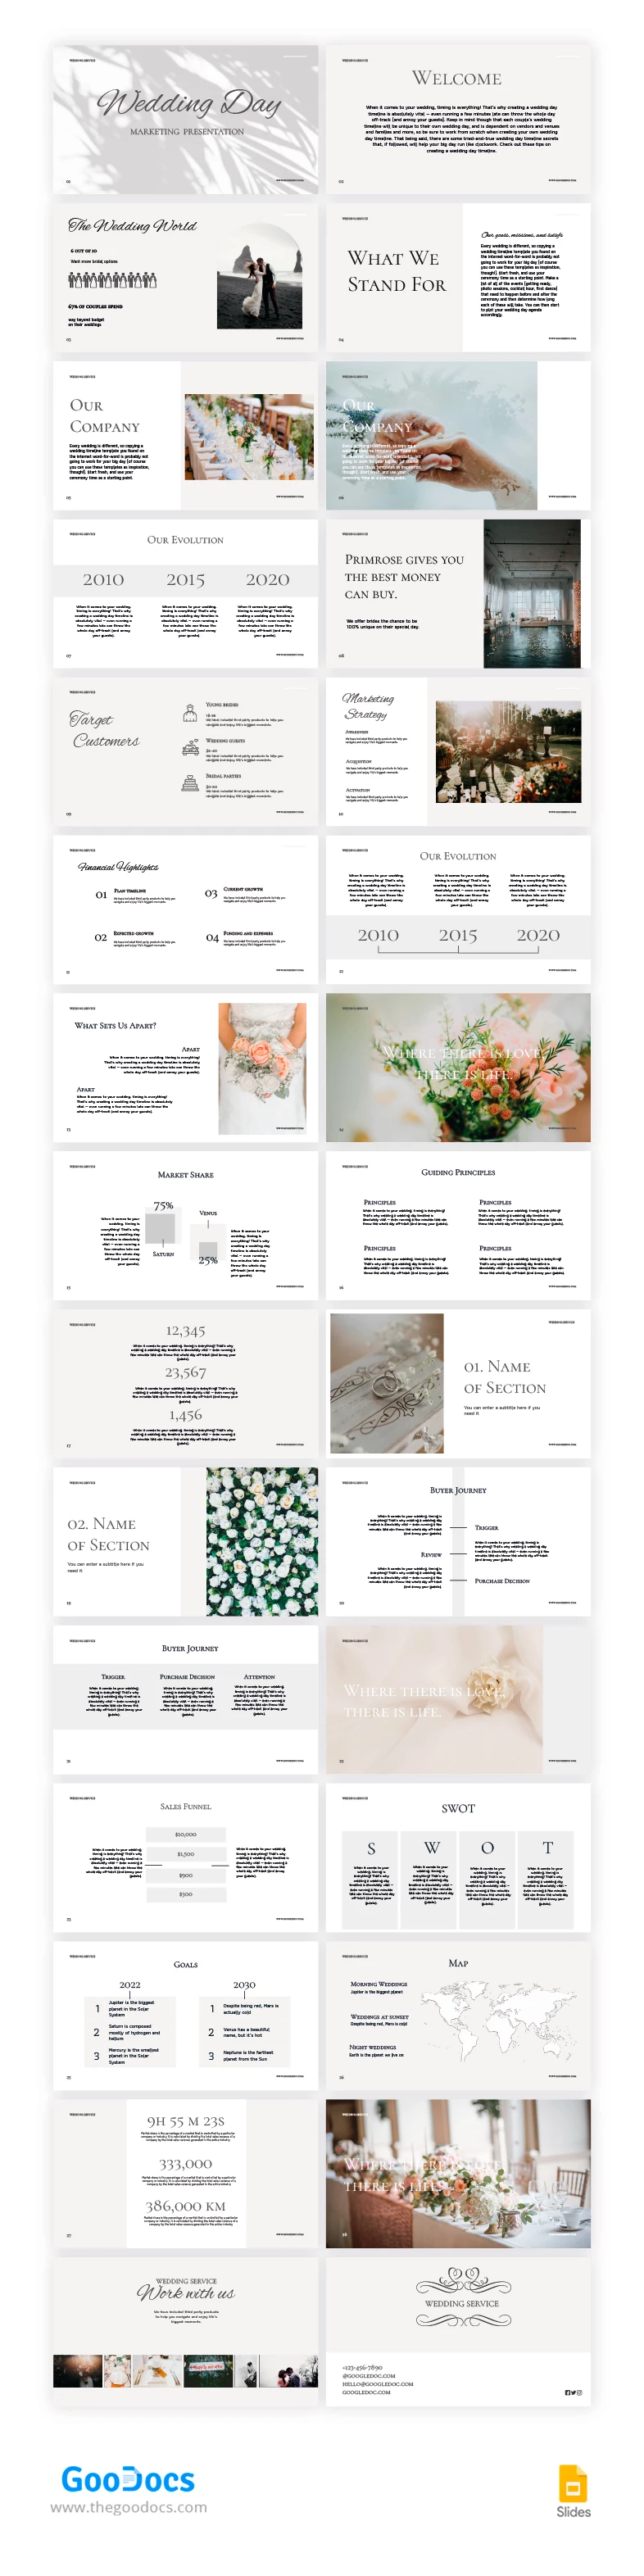 Aesthetic Wedding Day - free Google Docs Template - 10066986